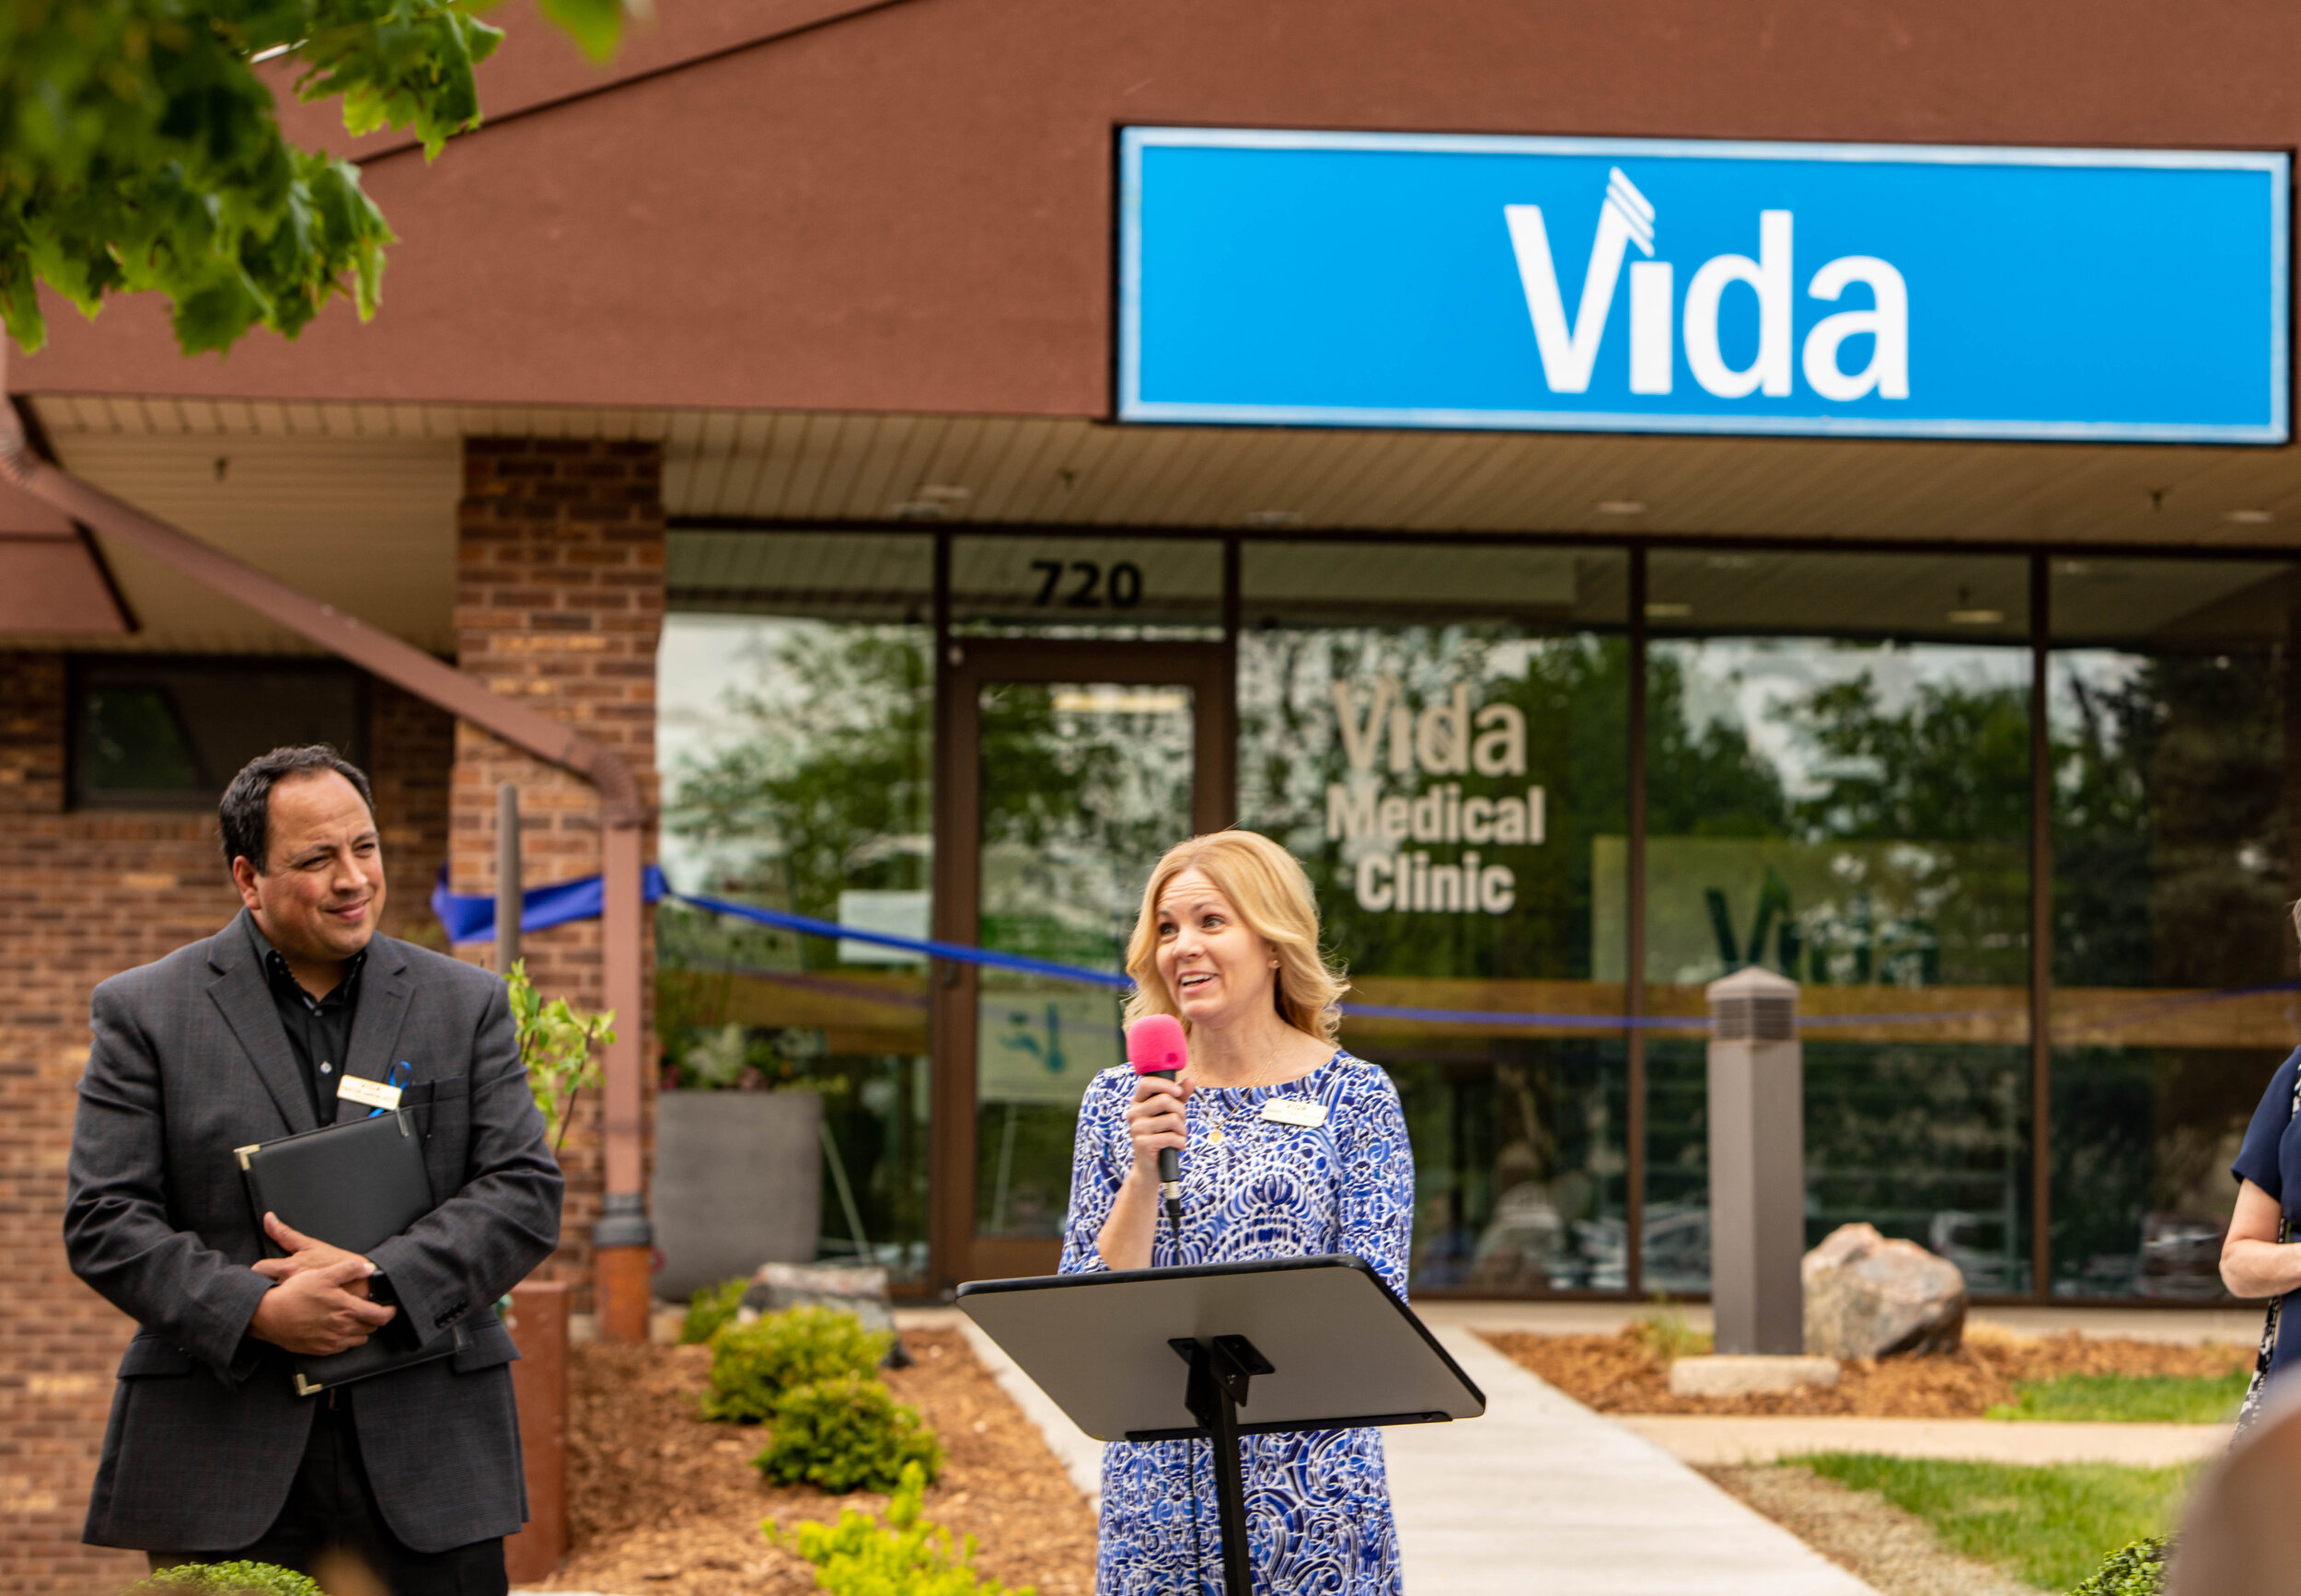 Vida Grand Opening _ Executive Director Anne Tretinyak Speaks at the Building Dedication (1).jpg